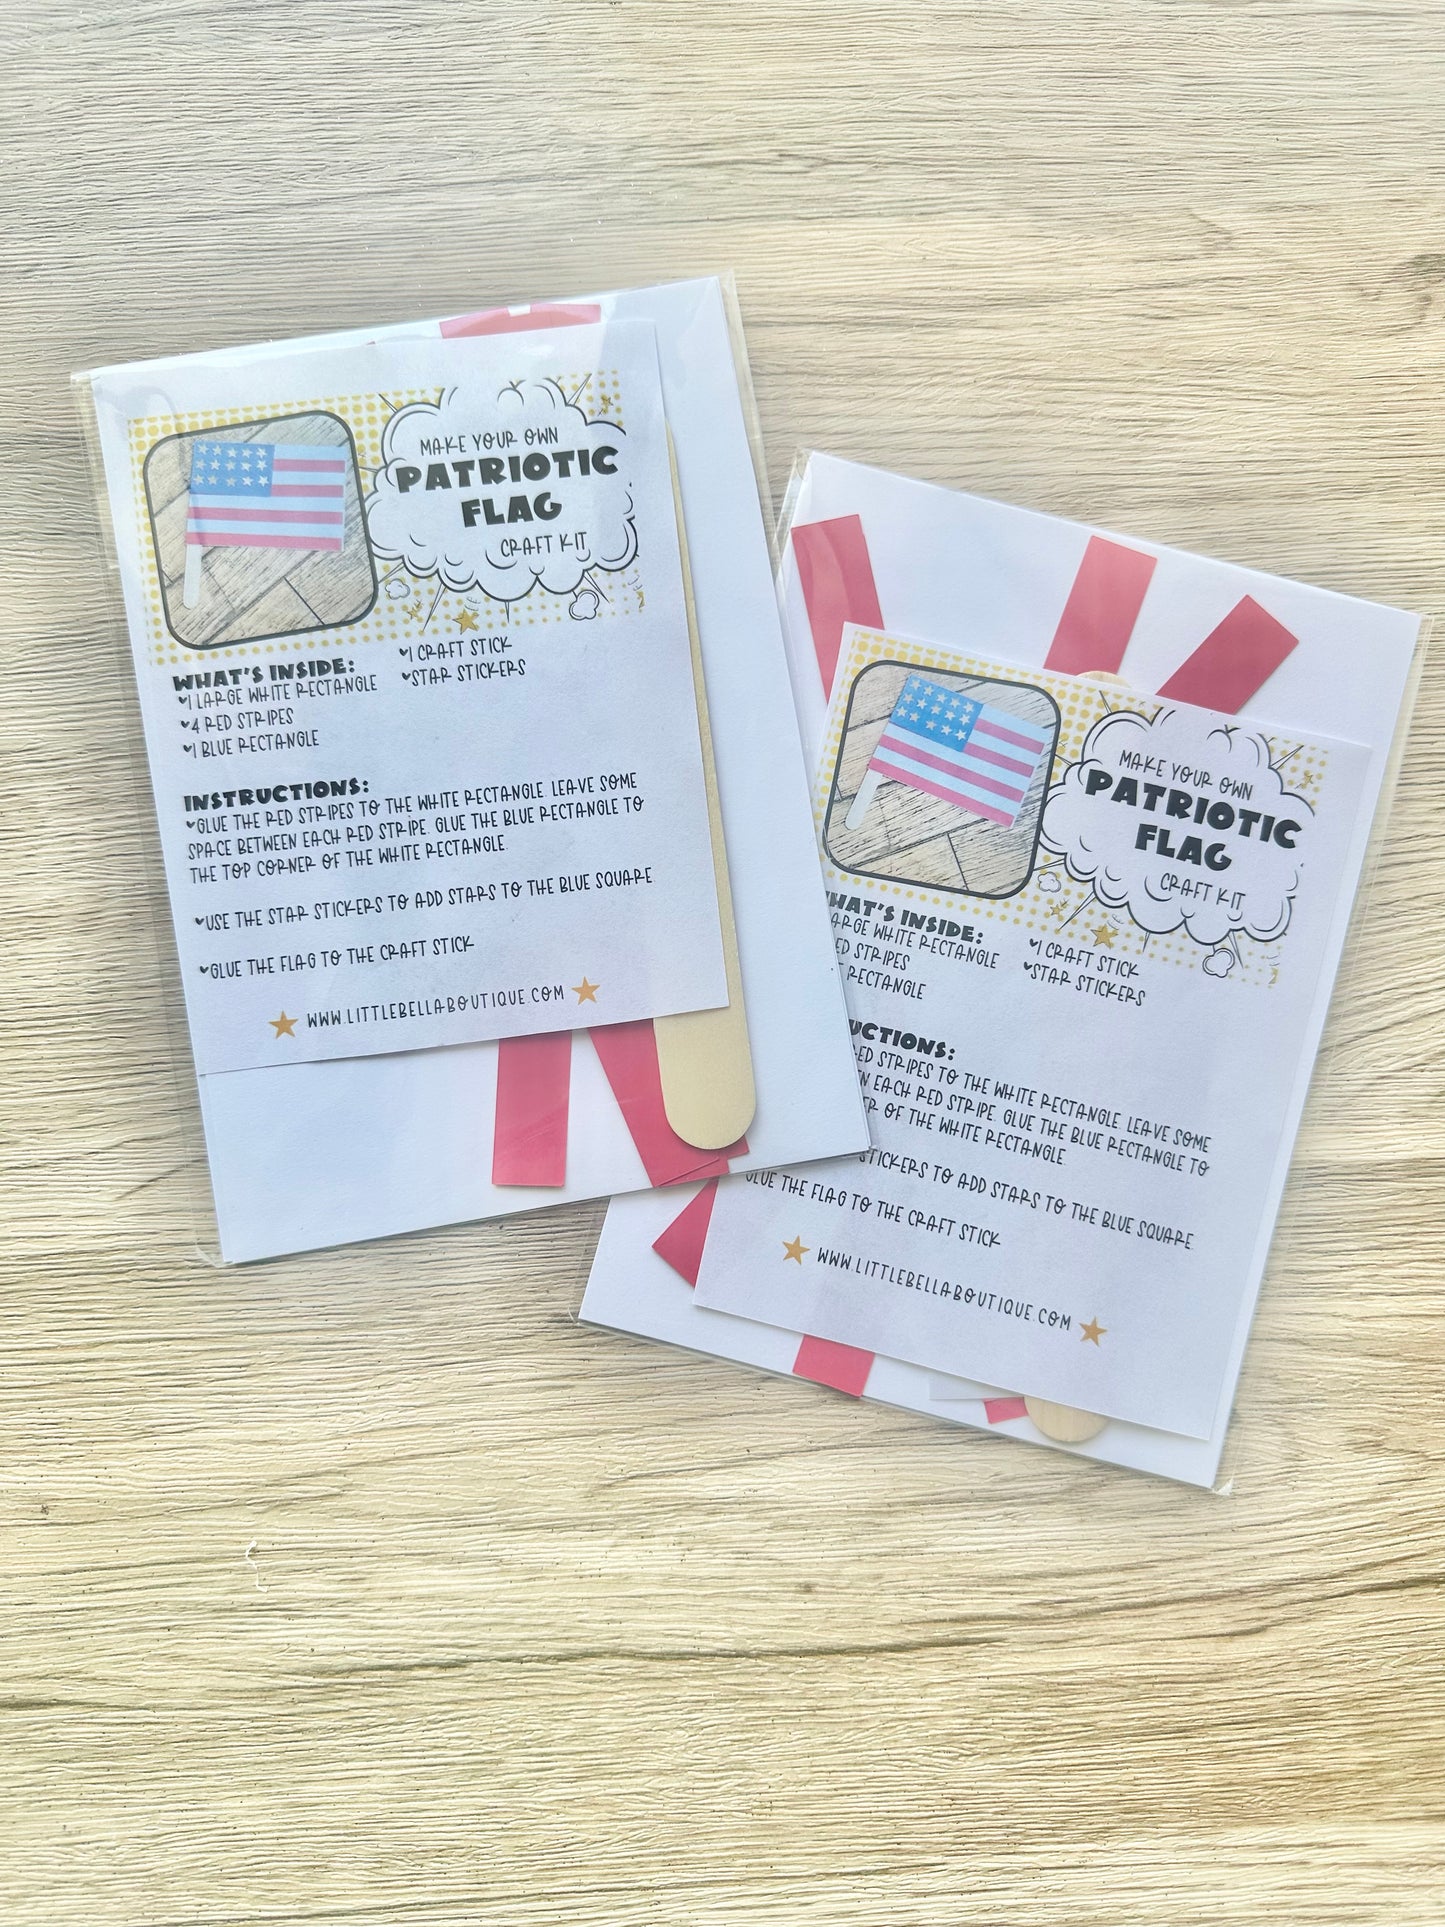 Dollar Deals: Make Your Own Patriotic Flag Paper Craft Kit